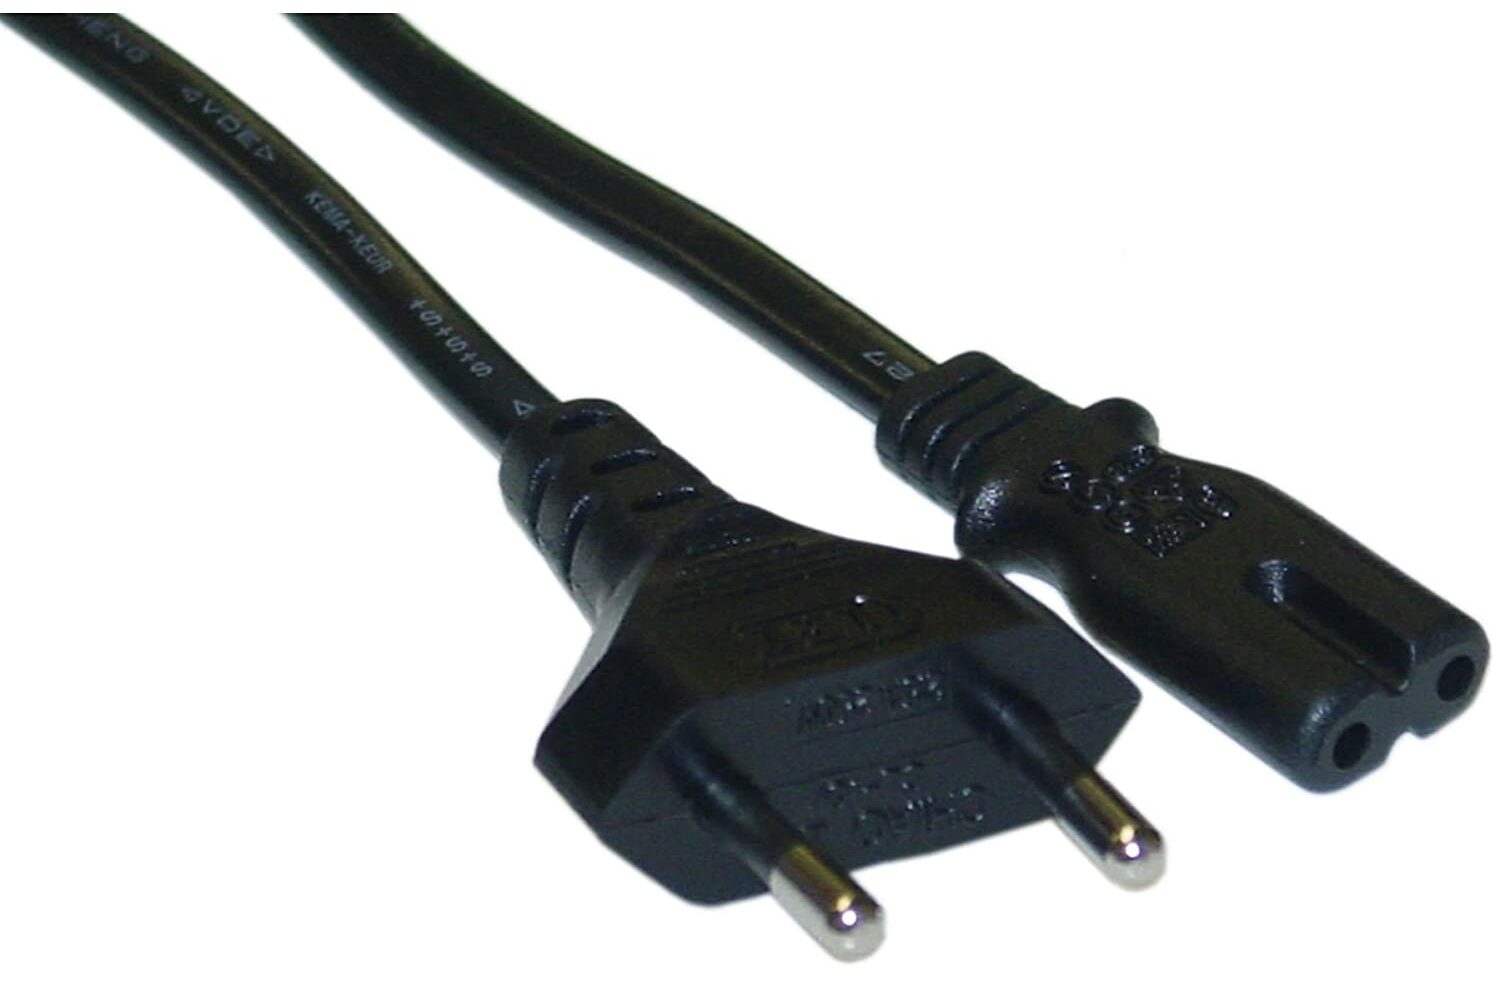 sytem power cords